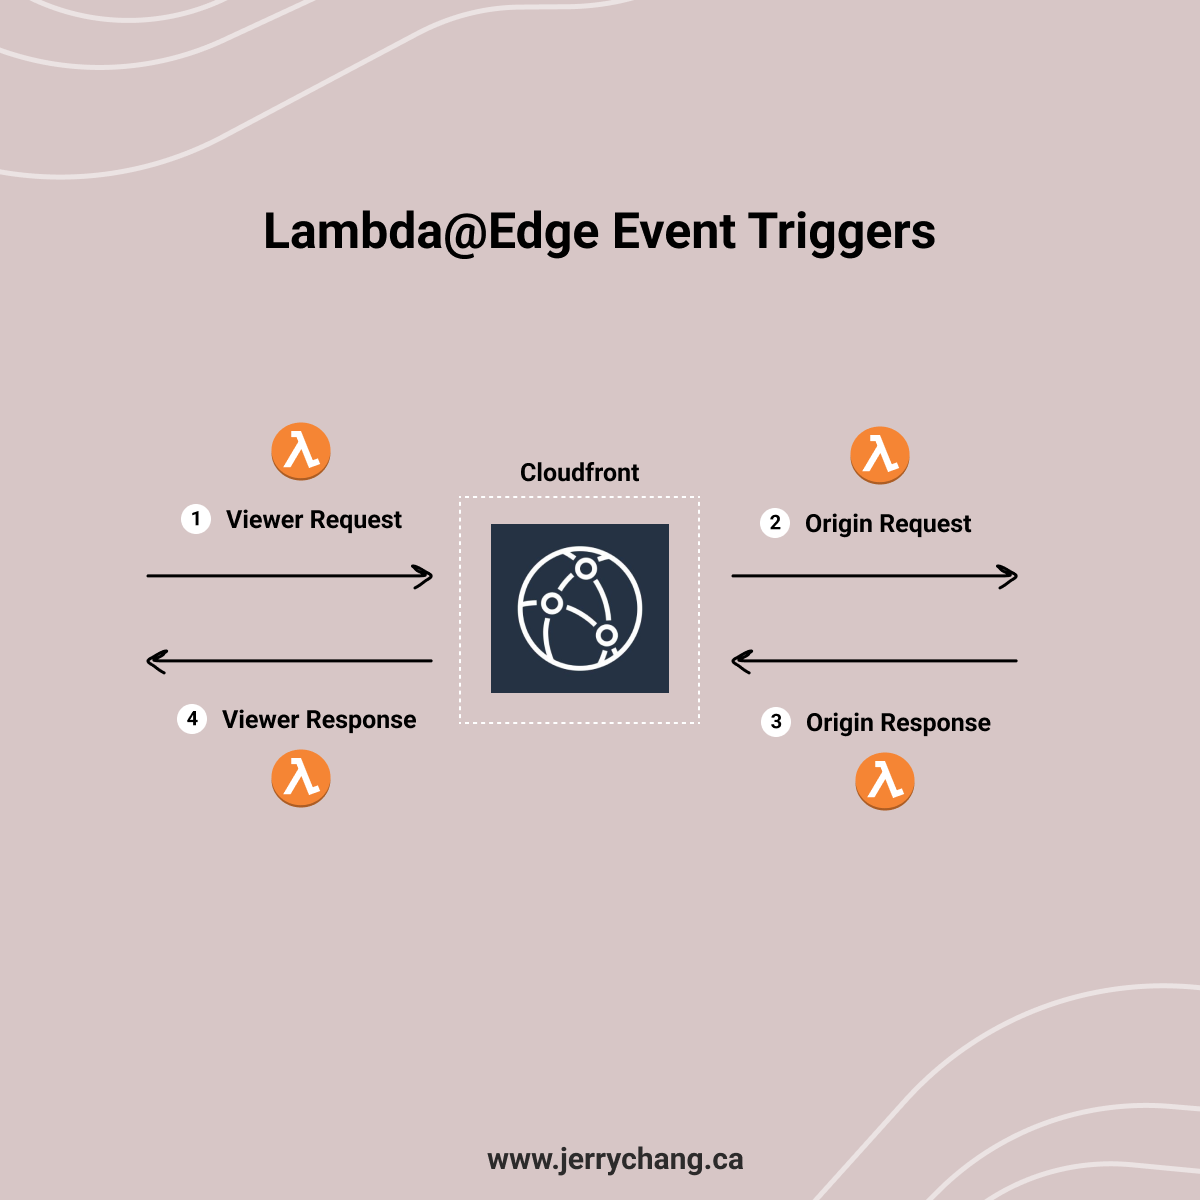 Illustration of Lambda@Edge Event triggers